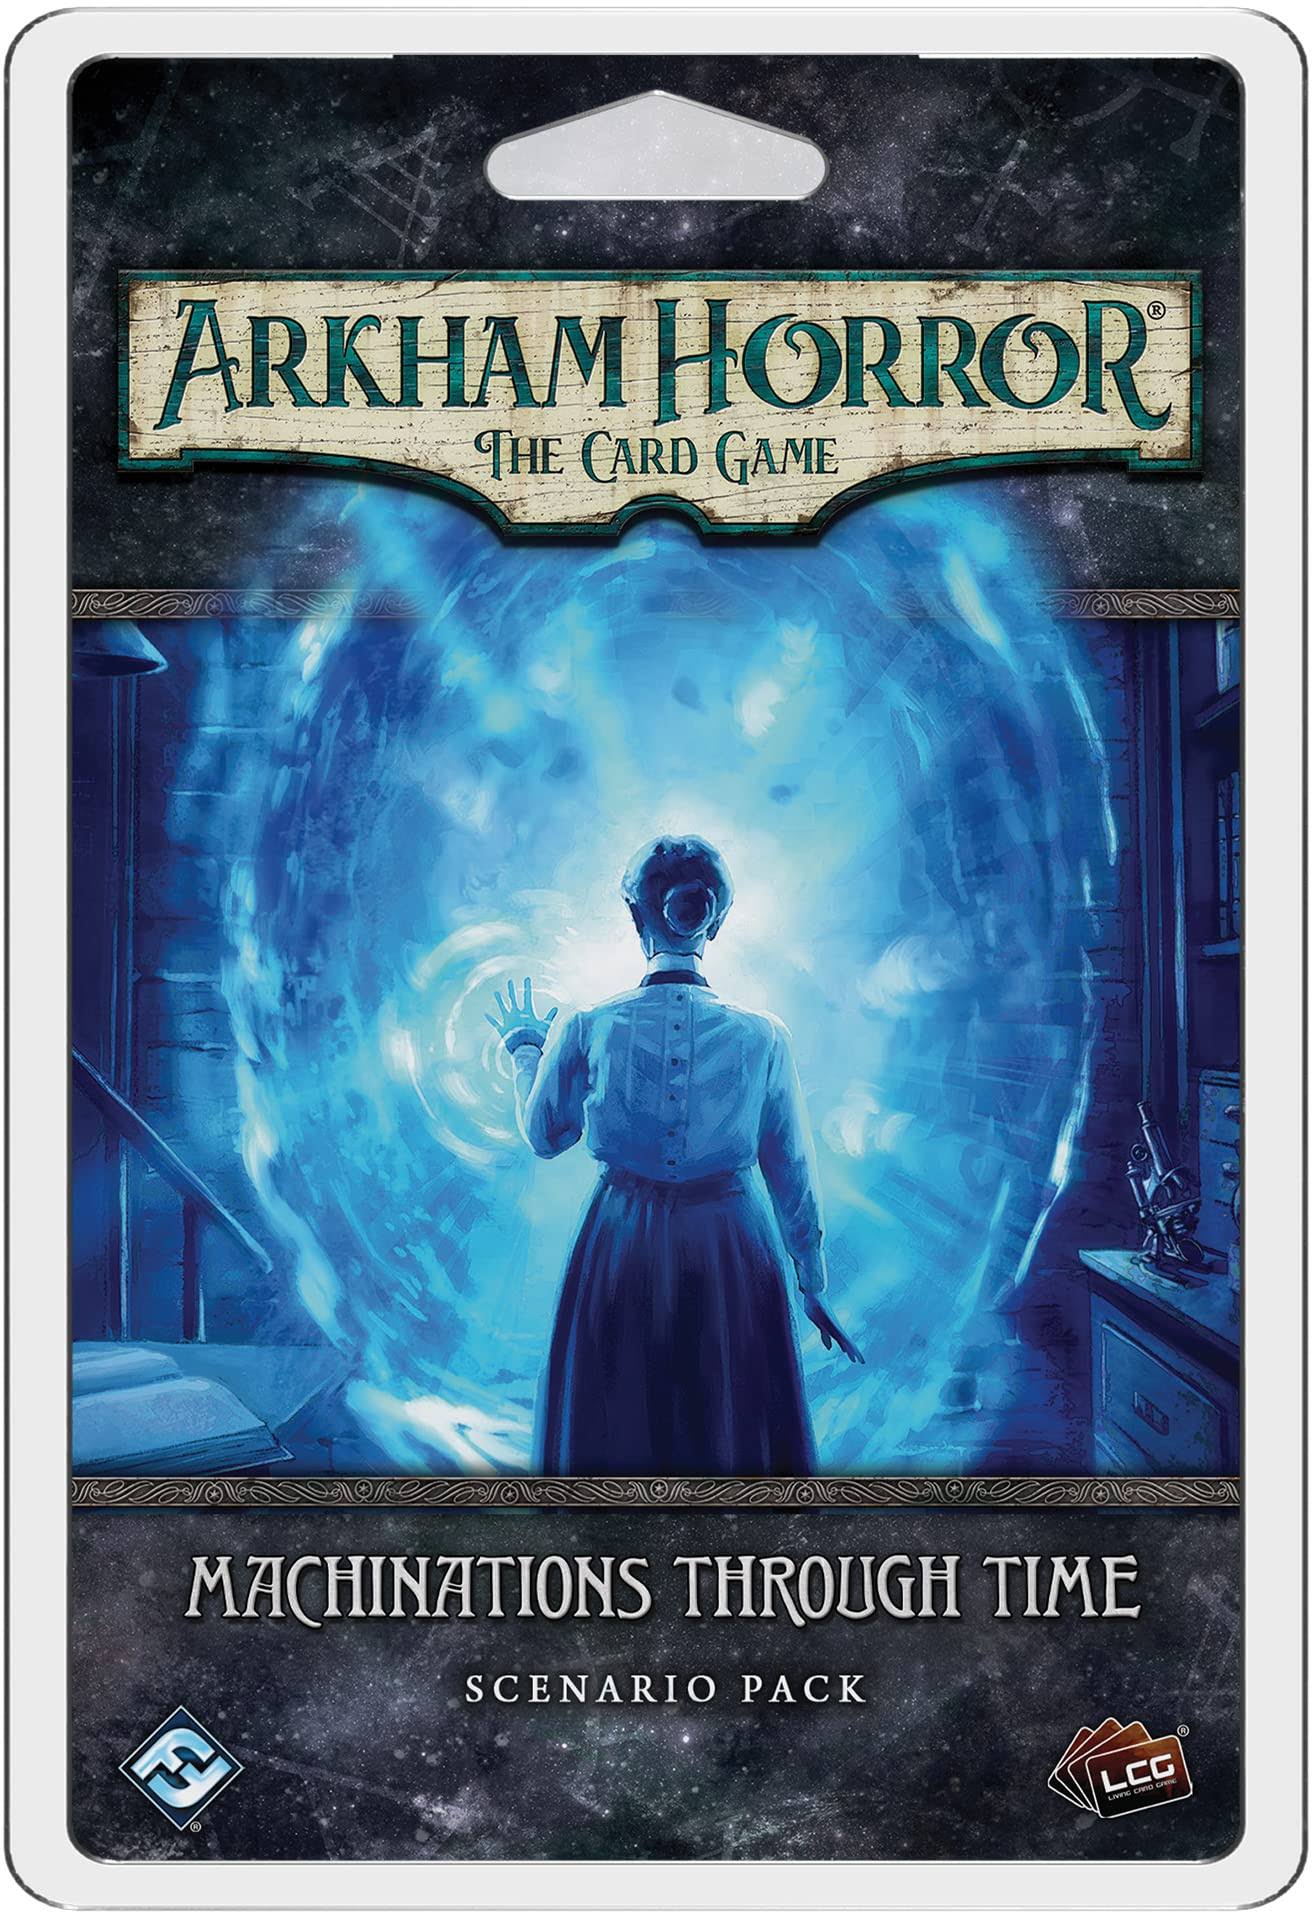 Arkham Horror The Card Game - Machinations Through Time Scenario Pack